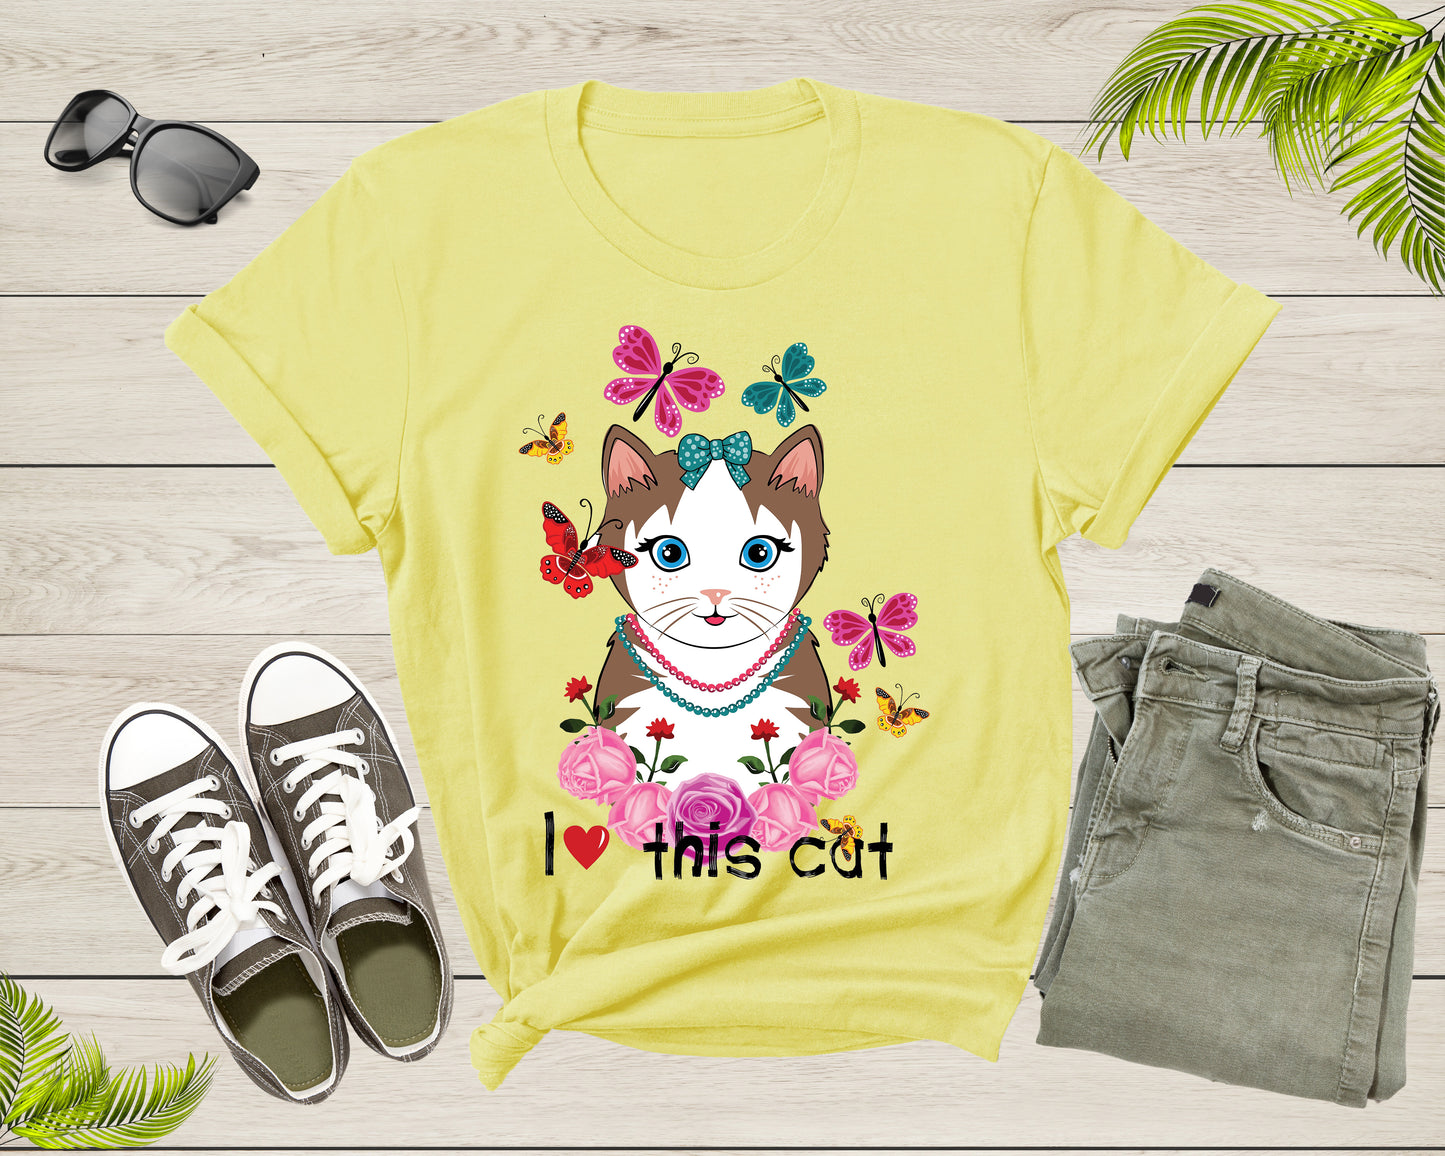 Cute I Love This Cat Butterflies and Roses for Women Girls T-Shirt Cat Lover Gift T Shirt for Men Women Kids Boys Girls Graphic Tshirt